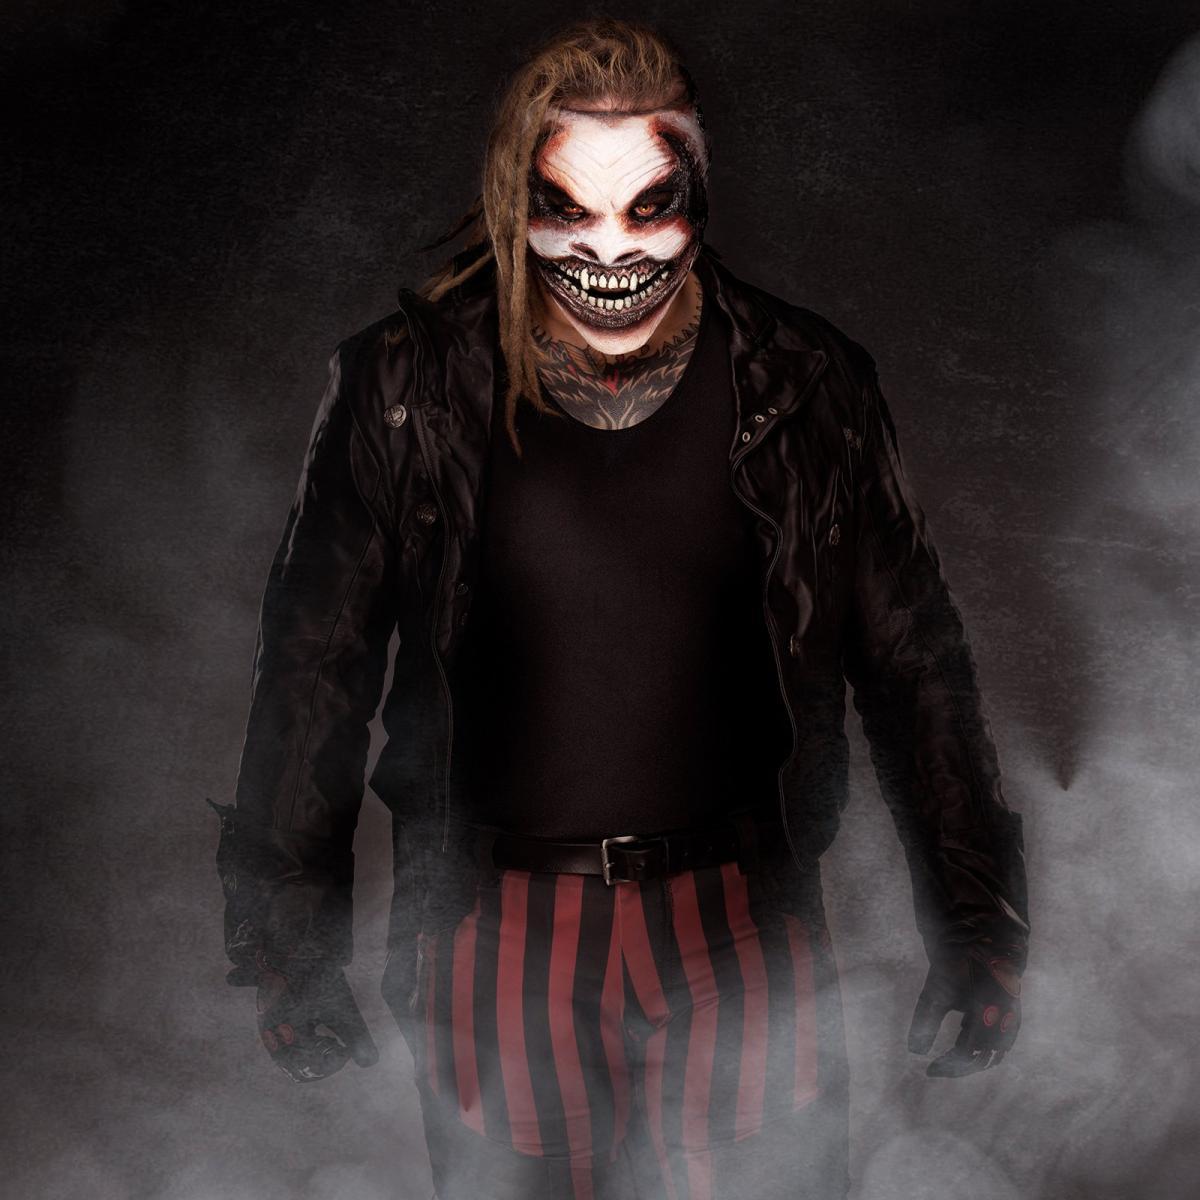 Bray Wyatt becomes The Fiend: photo